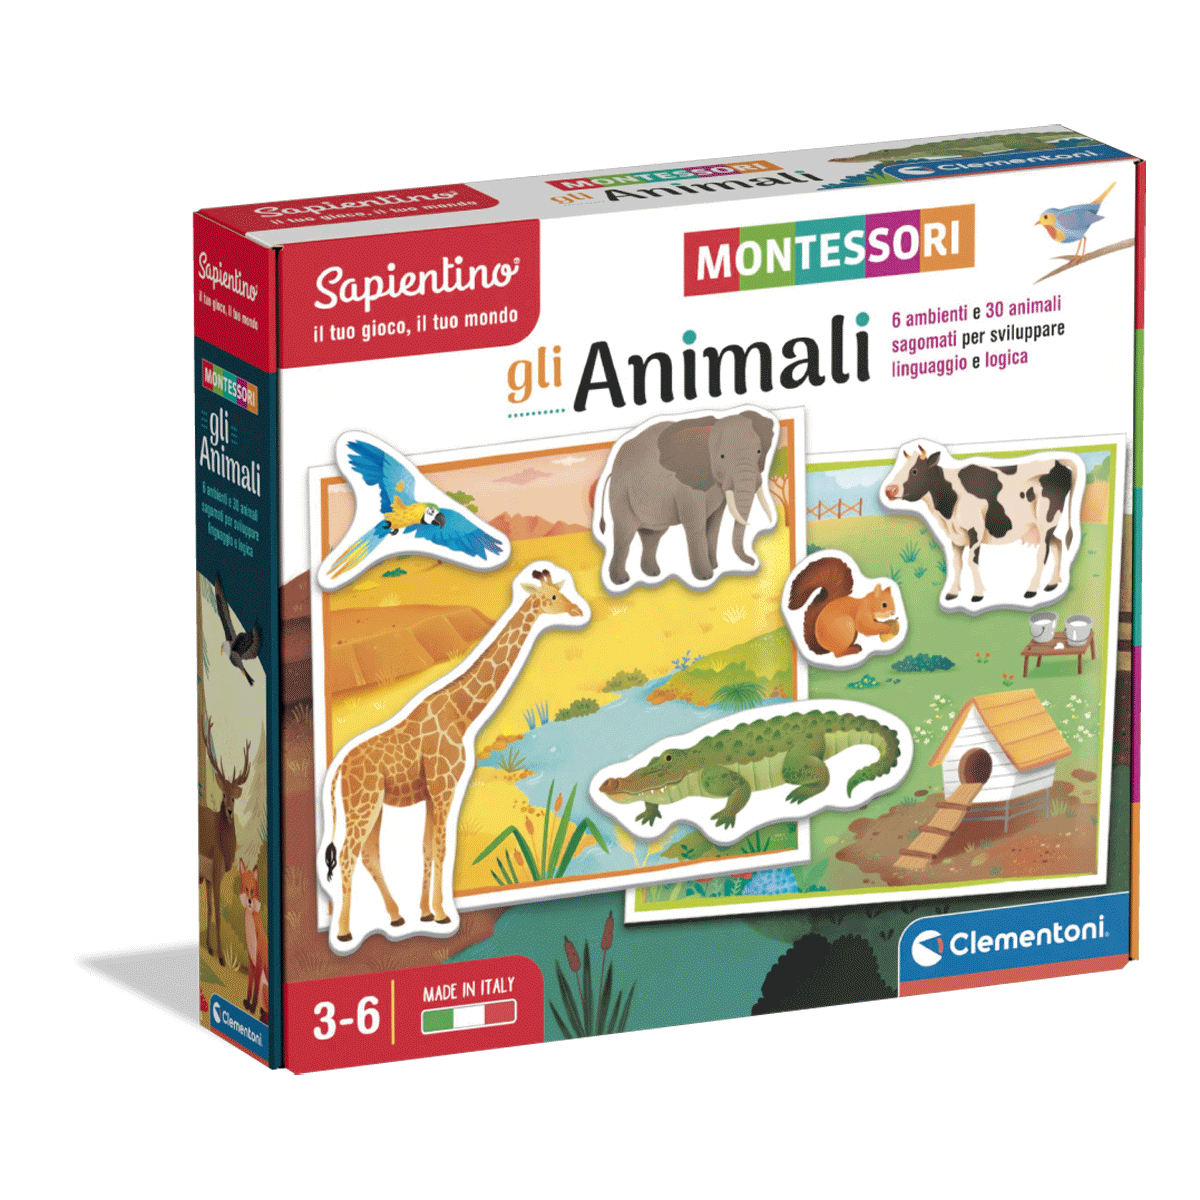 Montessori - gli animali - SAPIENTINO